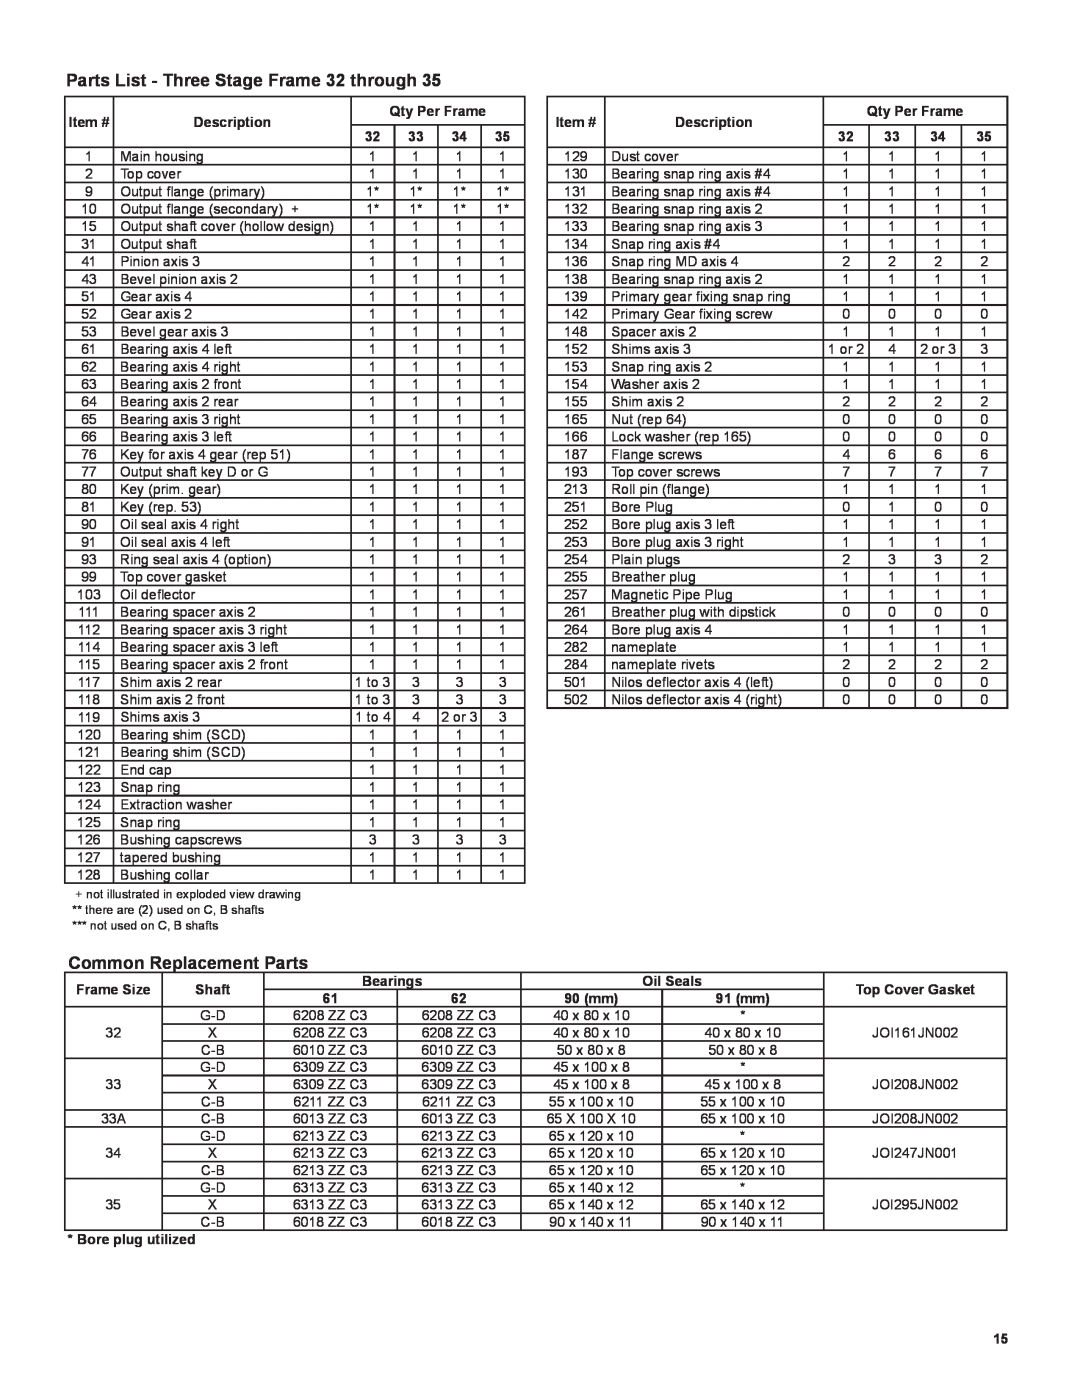 Emerson 3000 Parts List - Three Stage Frame 32 through, Common Replacement Parts, Description, Item #, Frame Size 